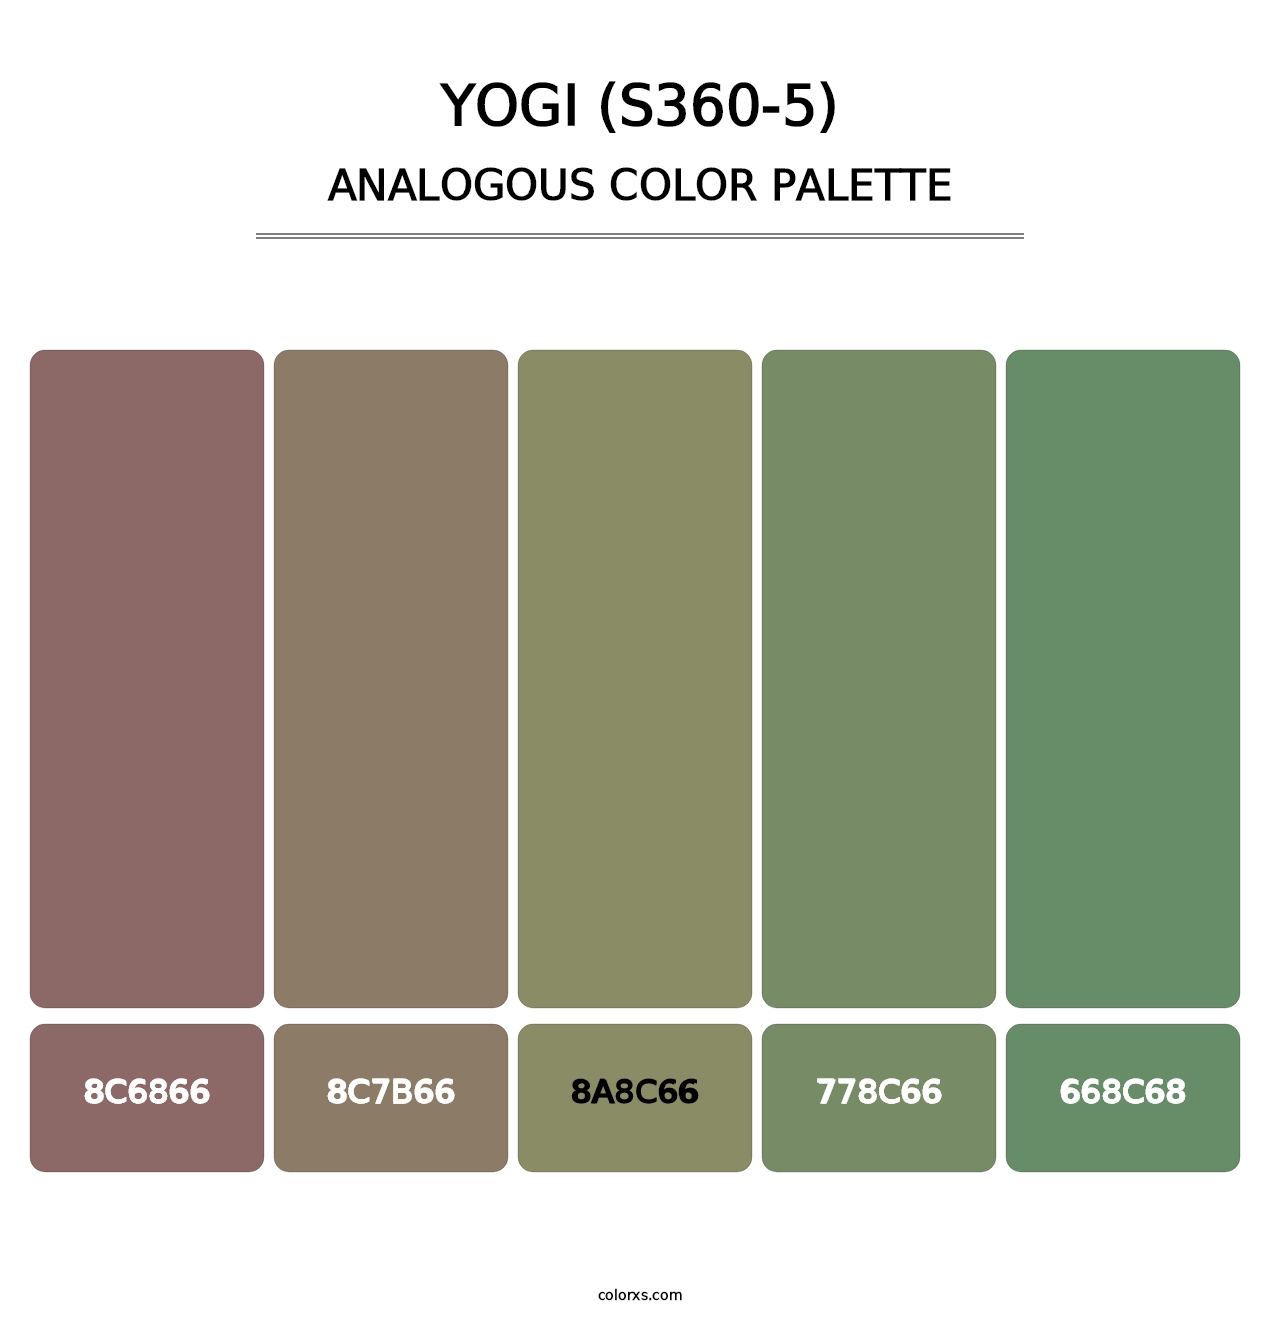 Yogi (S360-5) - Analogous Color Palette